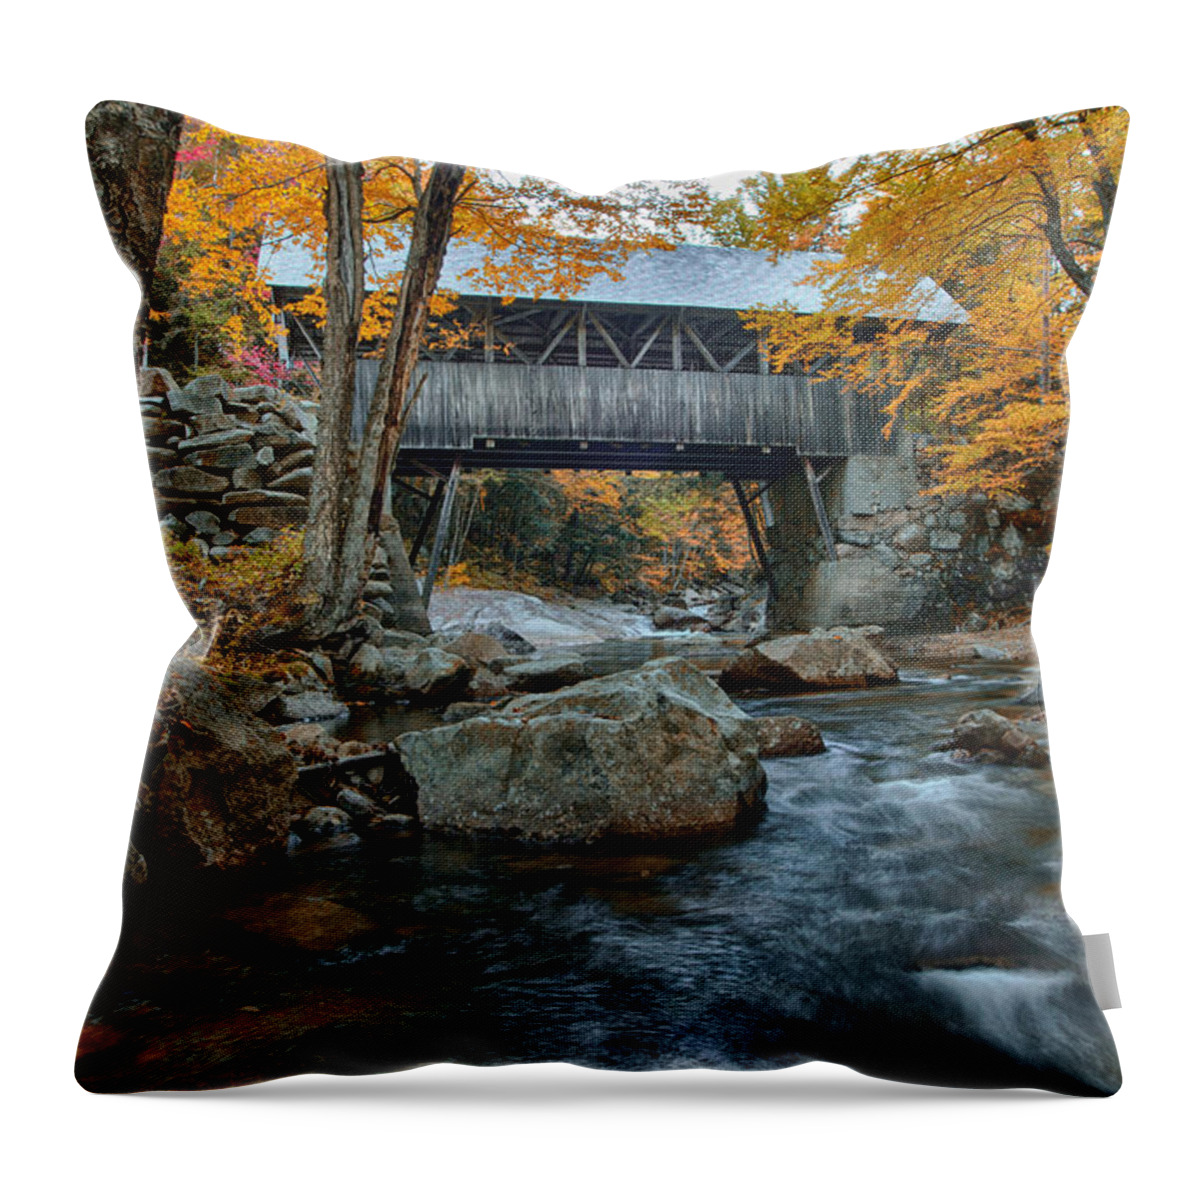 Flume Gorge Covered Bridge Throw Pillow featuring the photograph Flume Gorge covered bridge by Jeff Folger